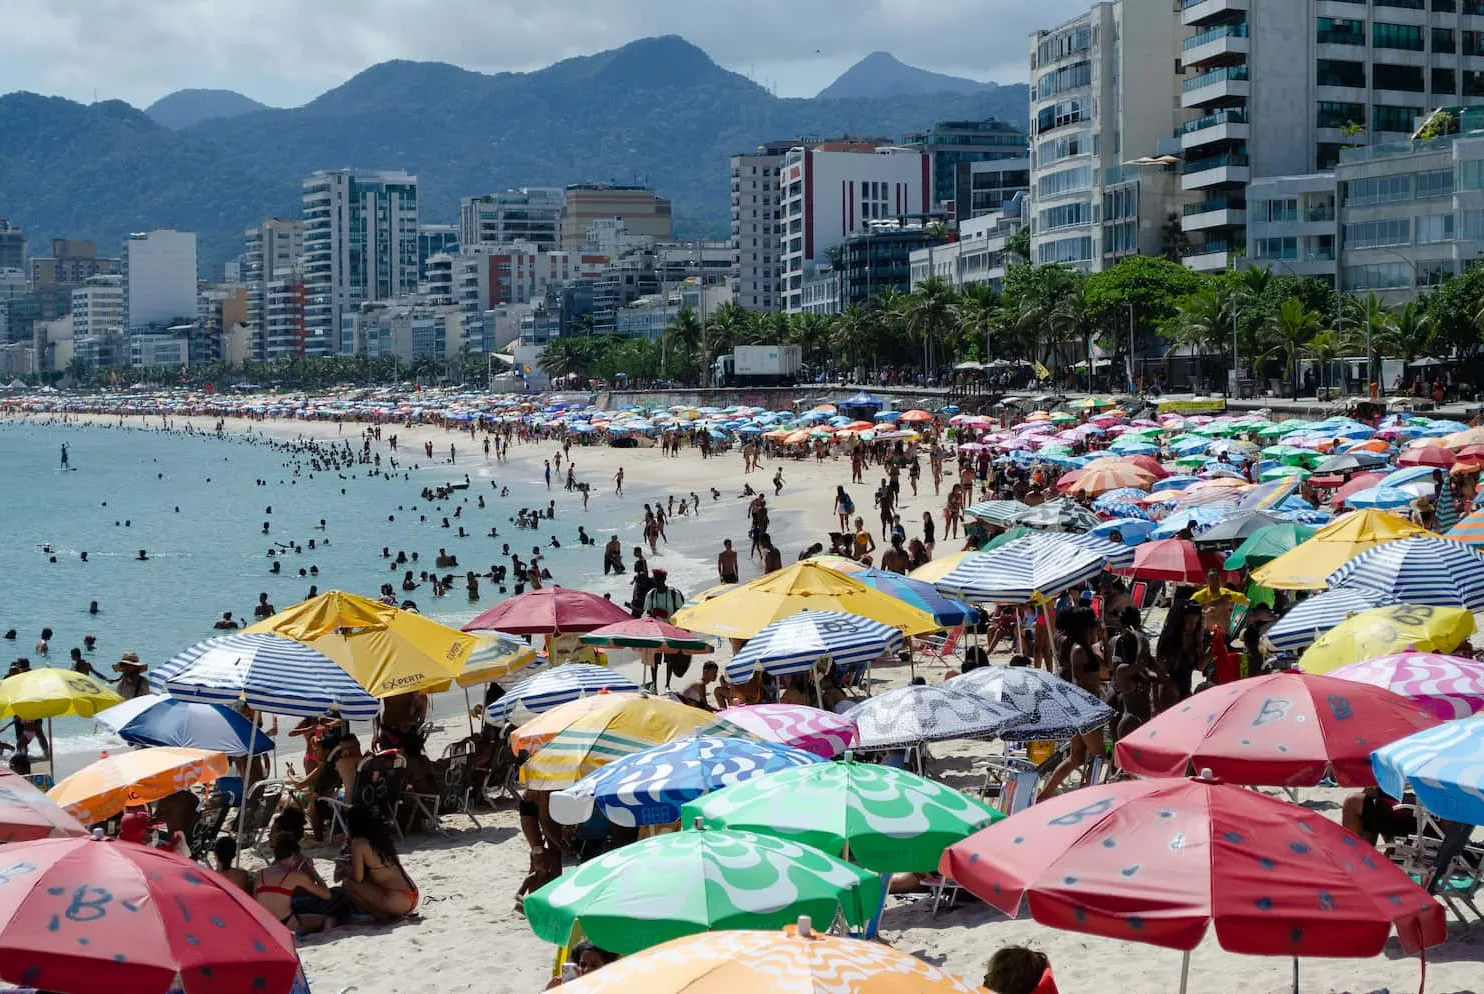 Movimento intenso nas praias do Rio nesta sexta-feira (14)